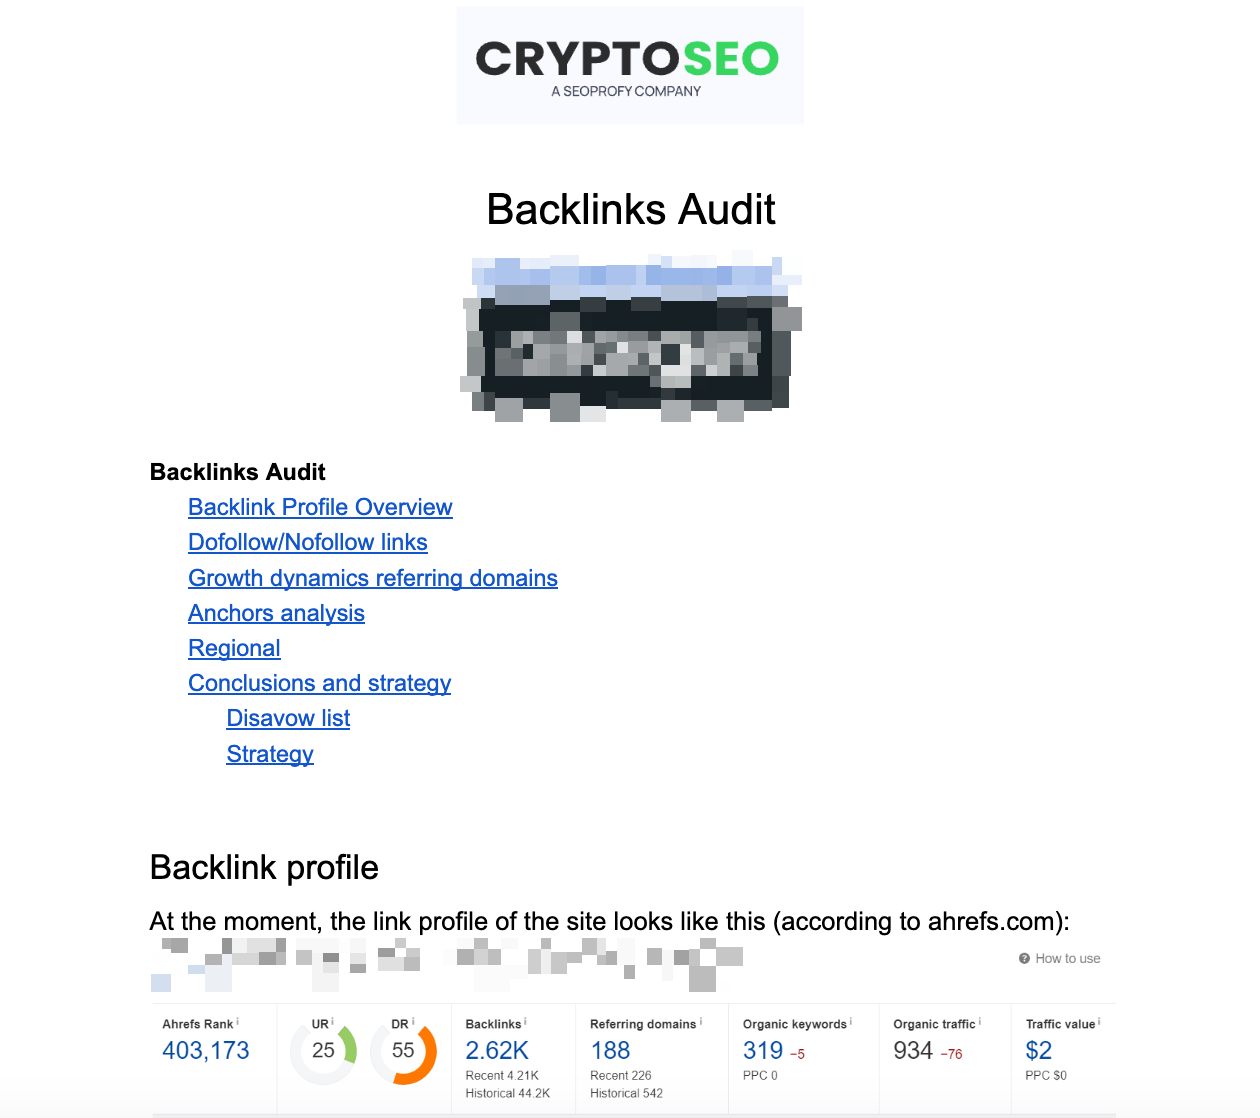 Summary of CryptoSeo's backlink audit